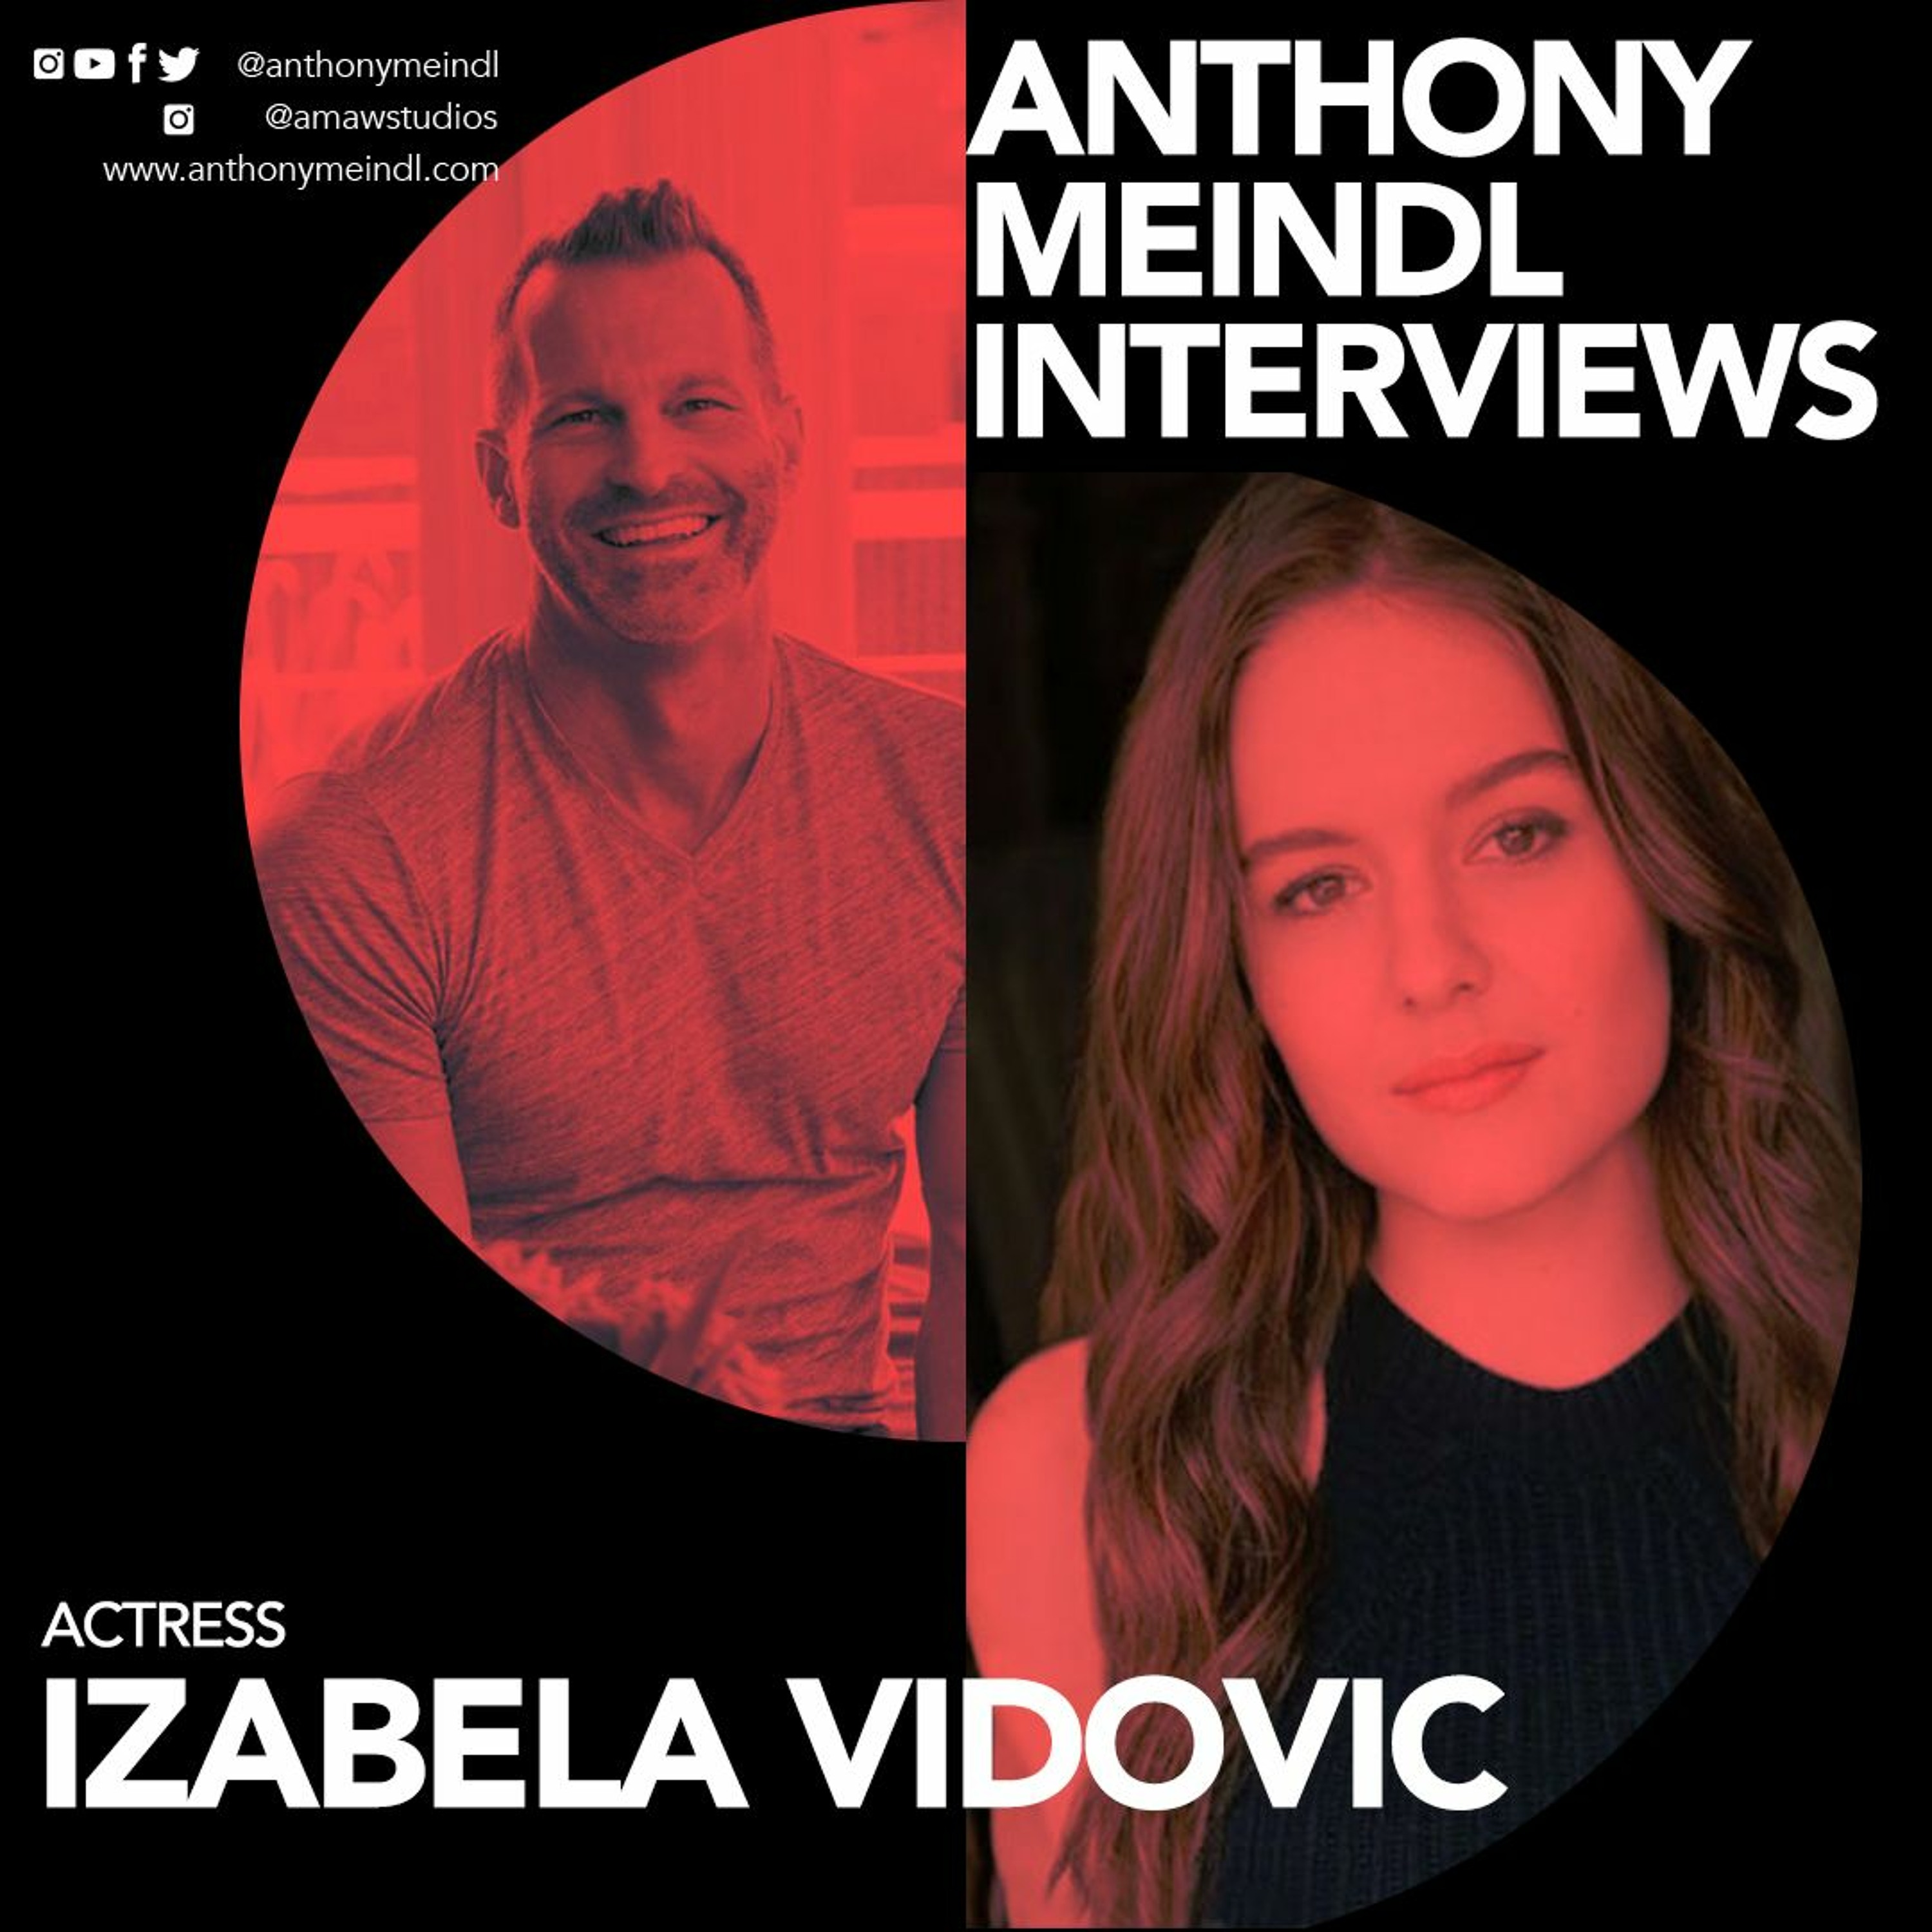 Anthony Interviews Actress Izabela Vidovic